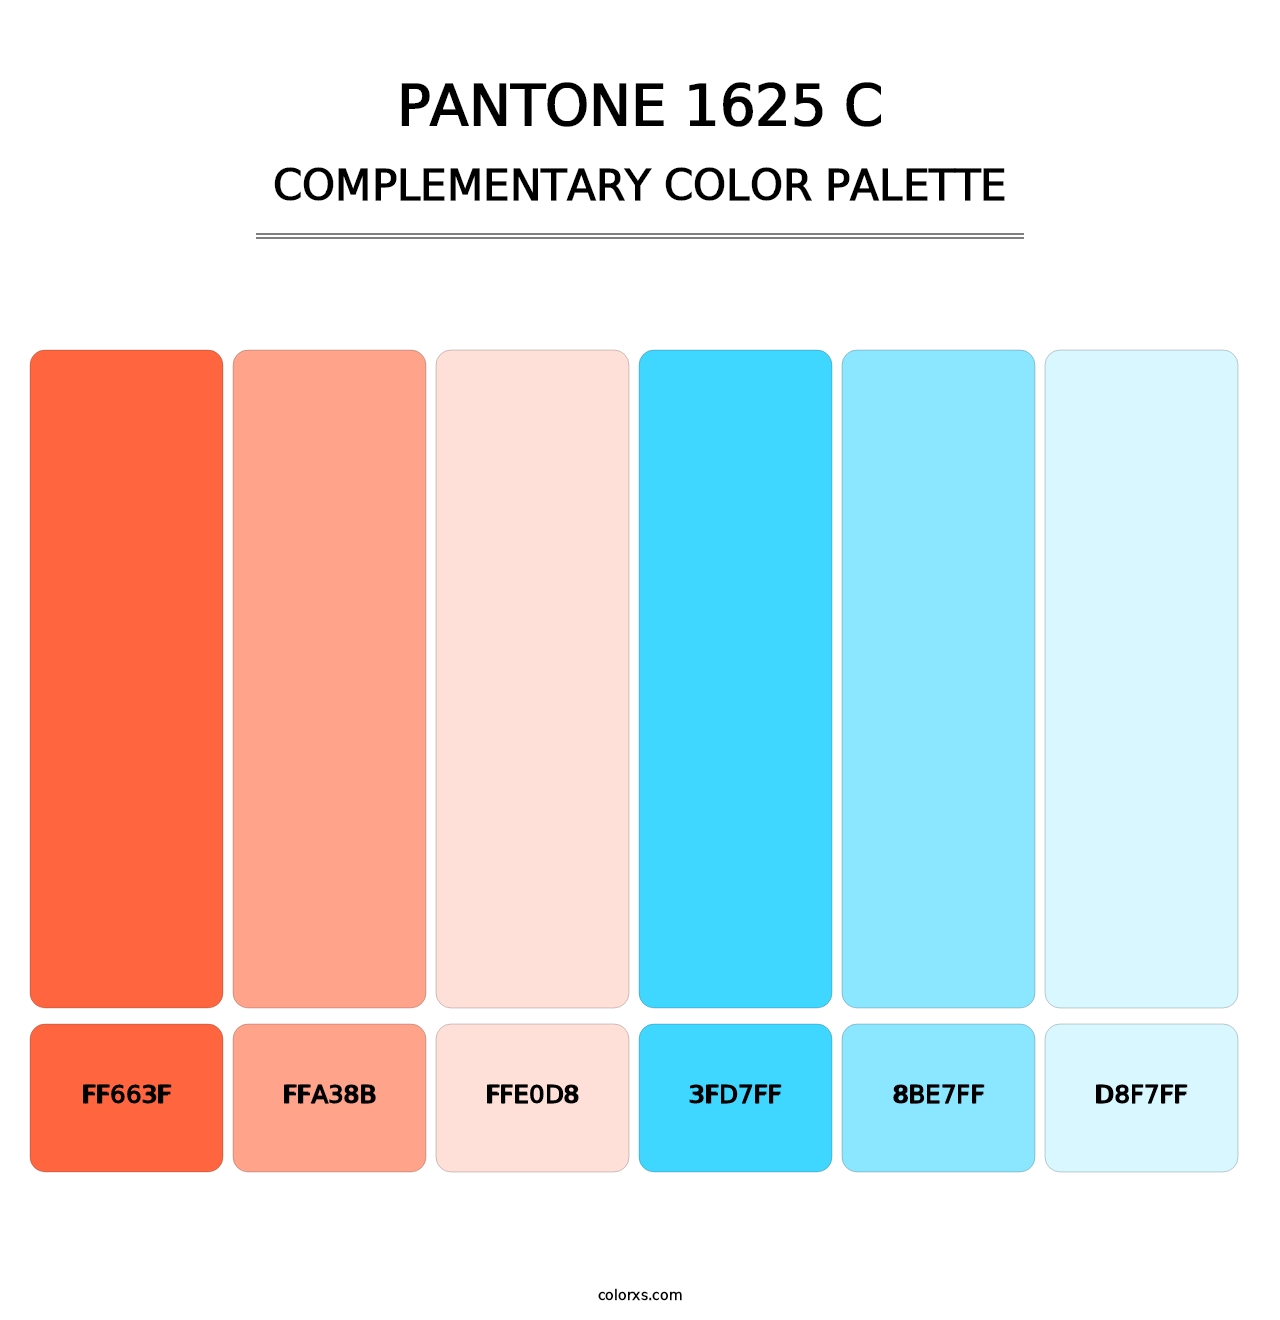 PANTONE 1625 C - Complementary Color Palette